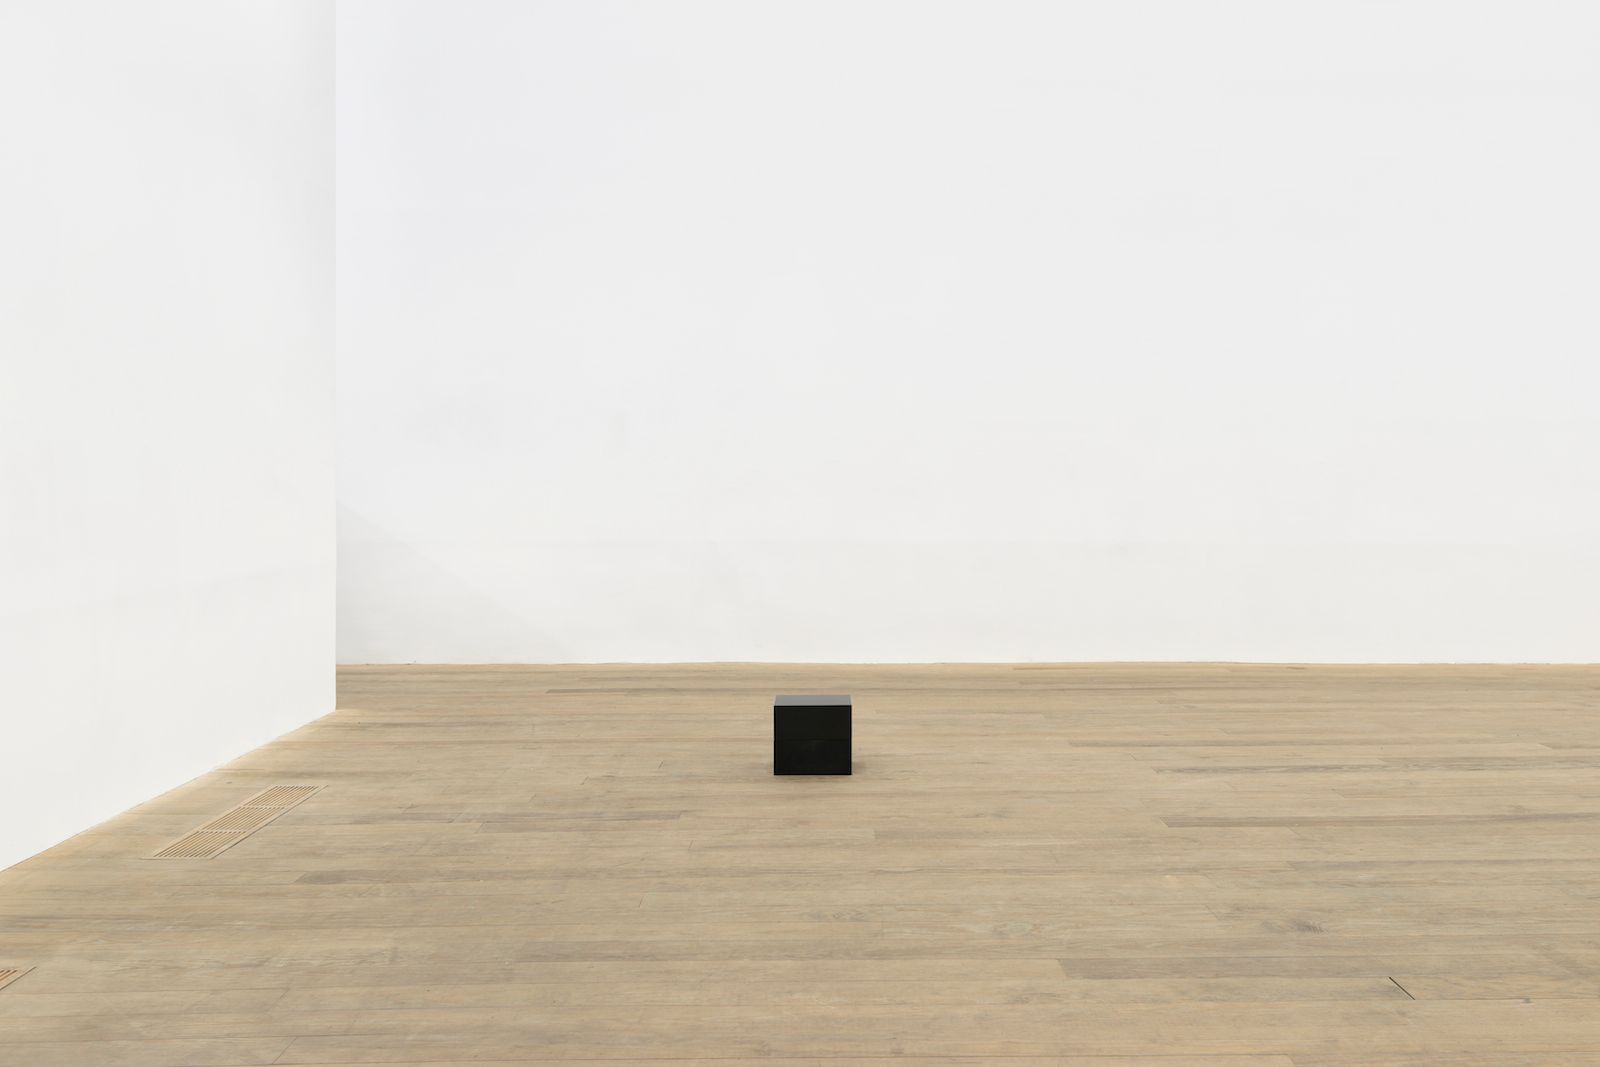 Stephen Lichty, Untitled, 2014, black oxidized steel and basalt, 9 × 10 × 10 in.